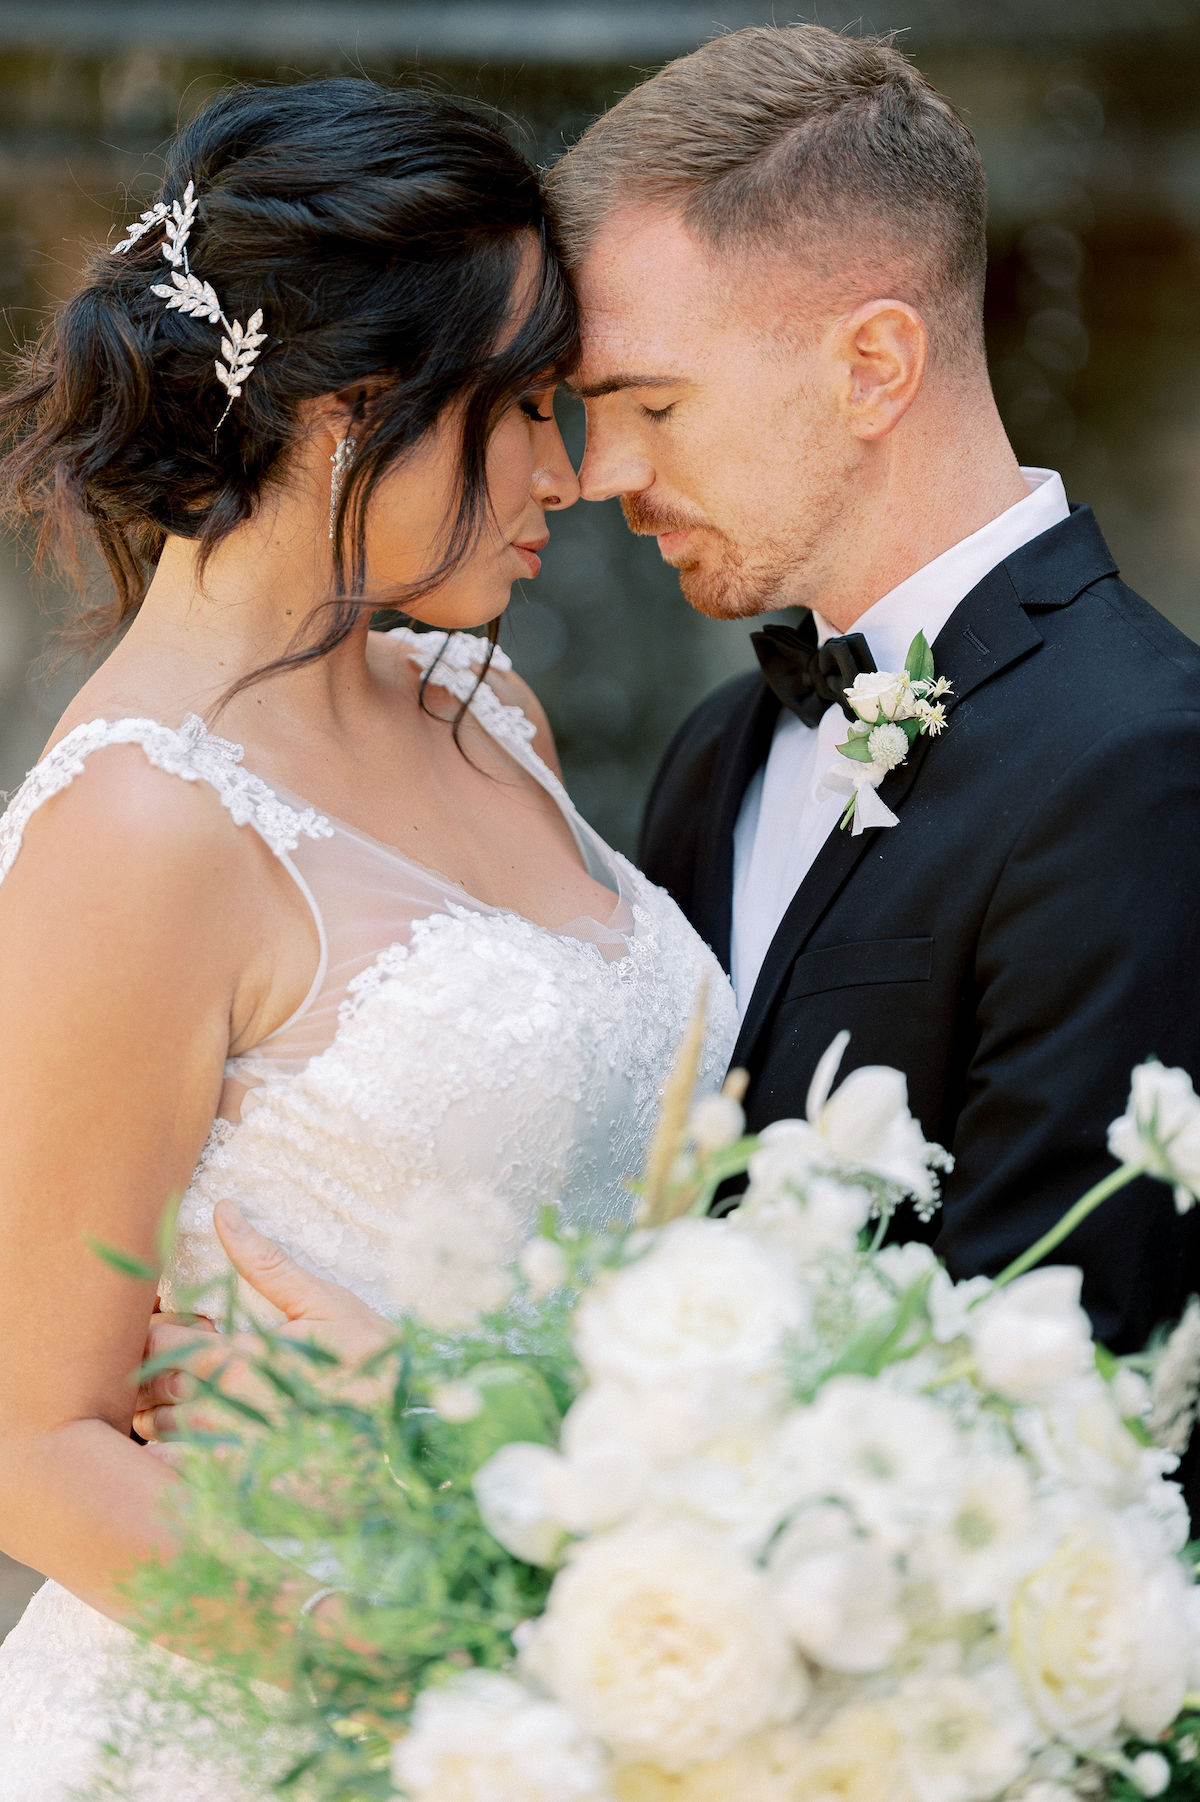 Romantic wedding picture - Linda Nari Photography